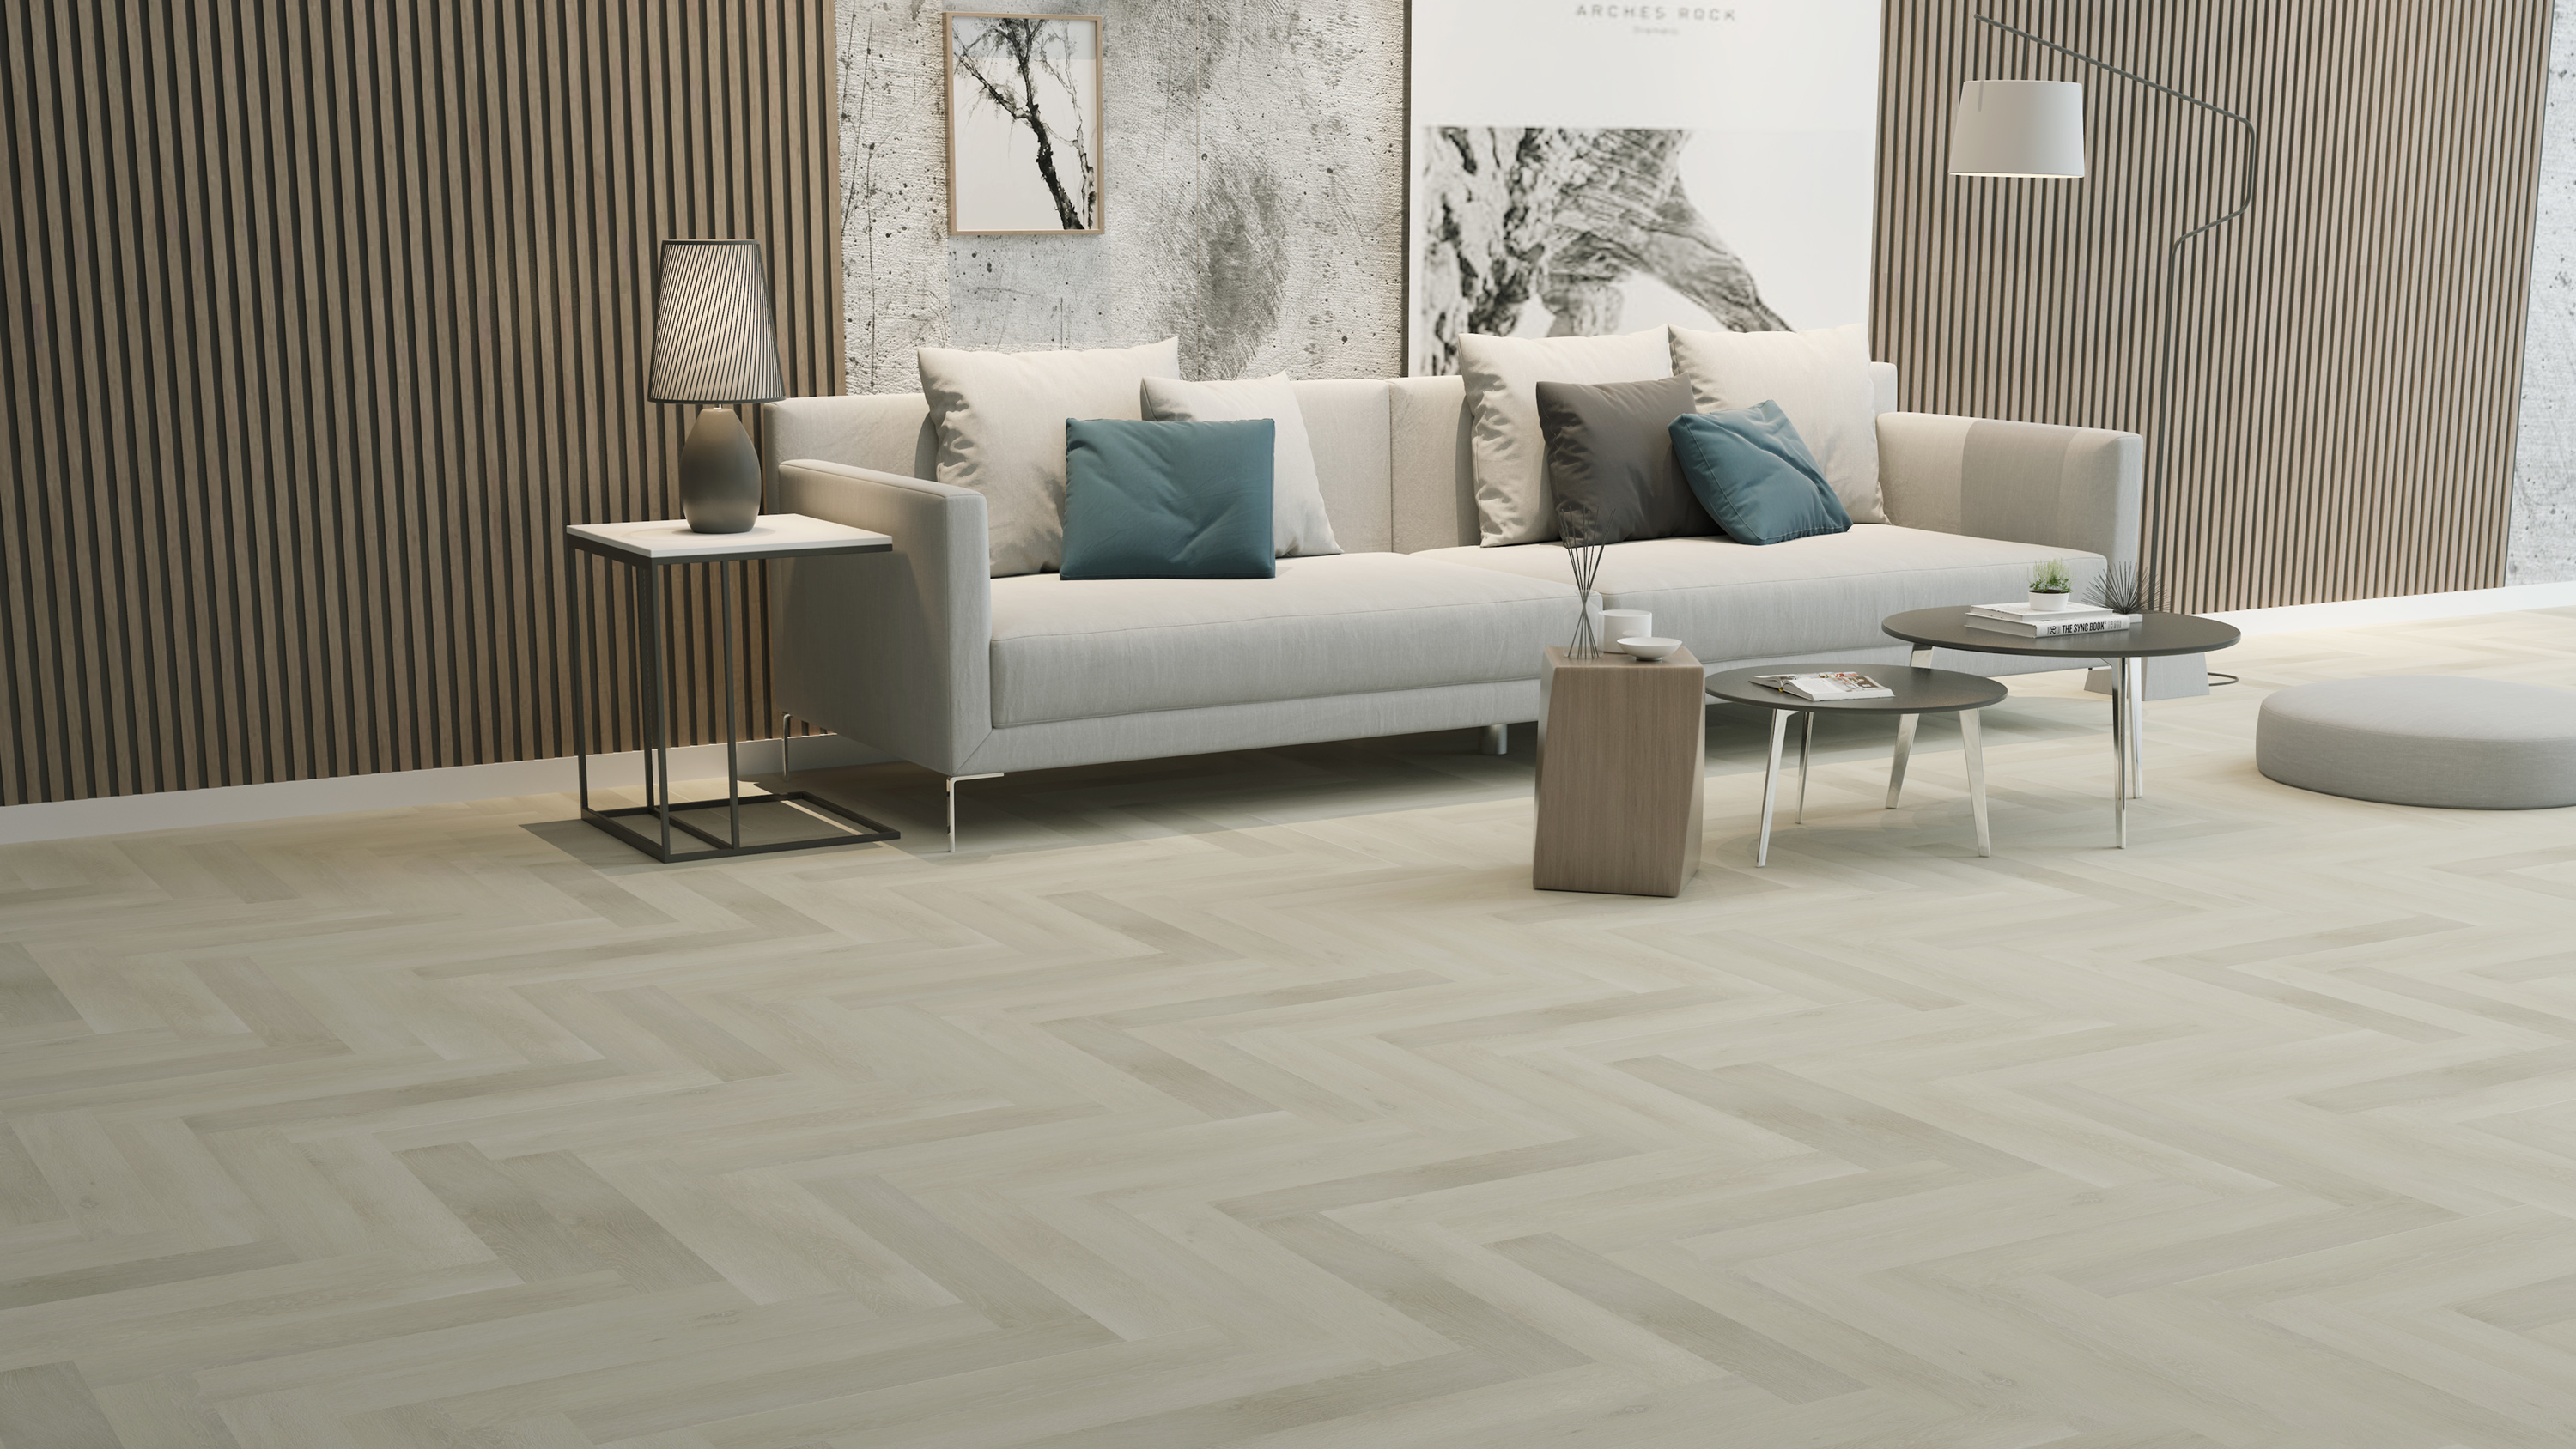 Woodland Lifestyle Introduces New Crete and Herringbone Flooring – EBOSS